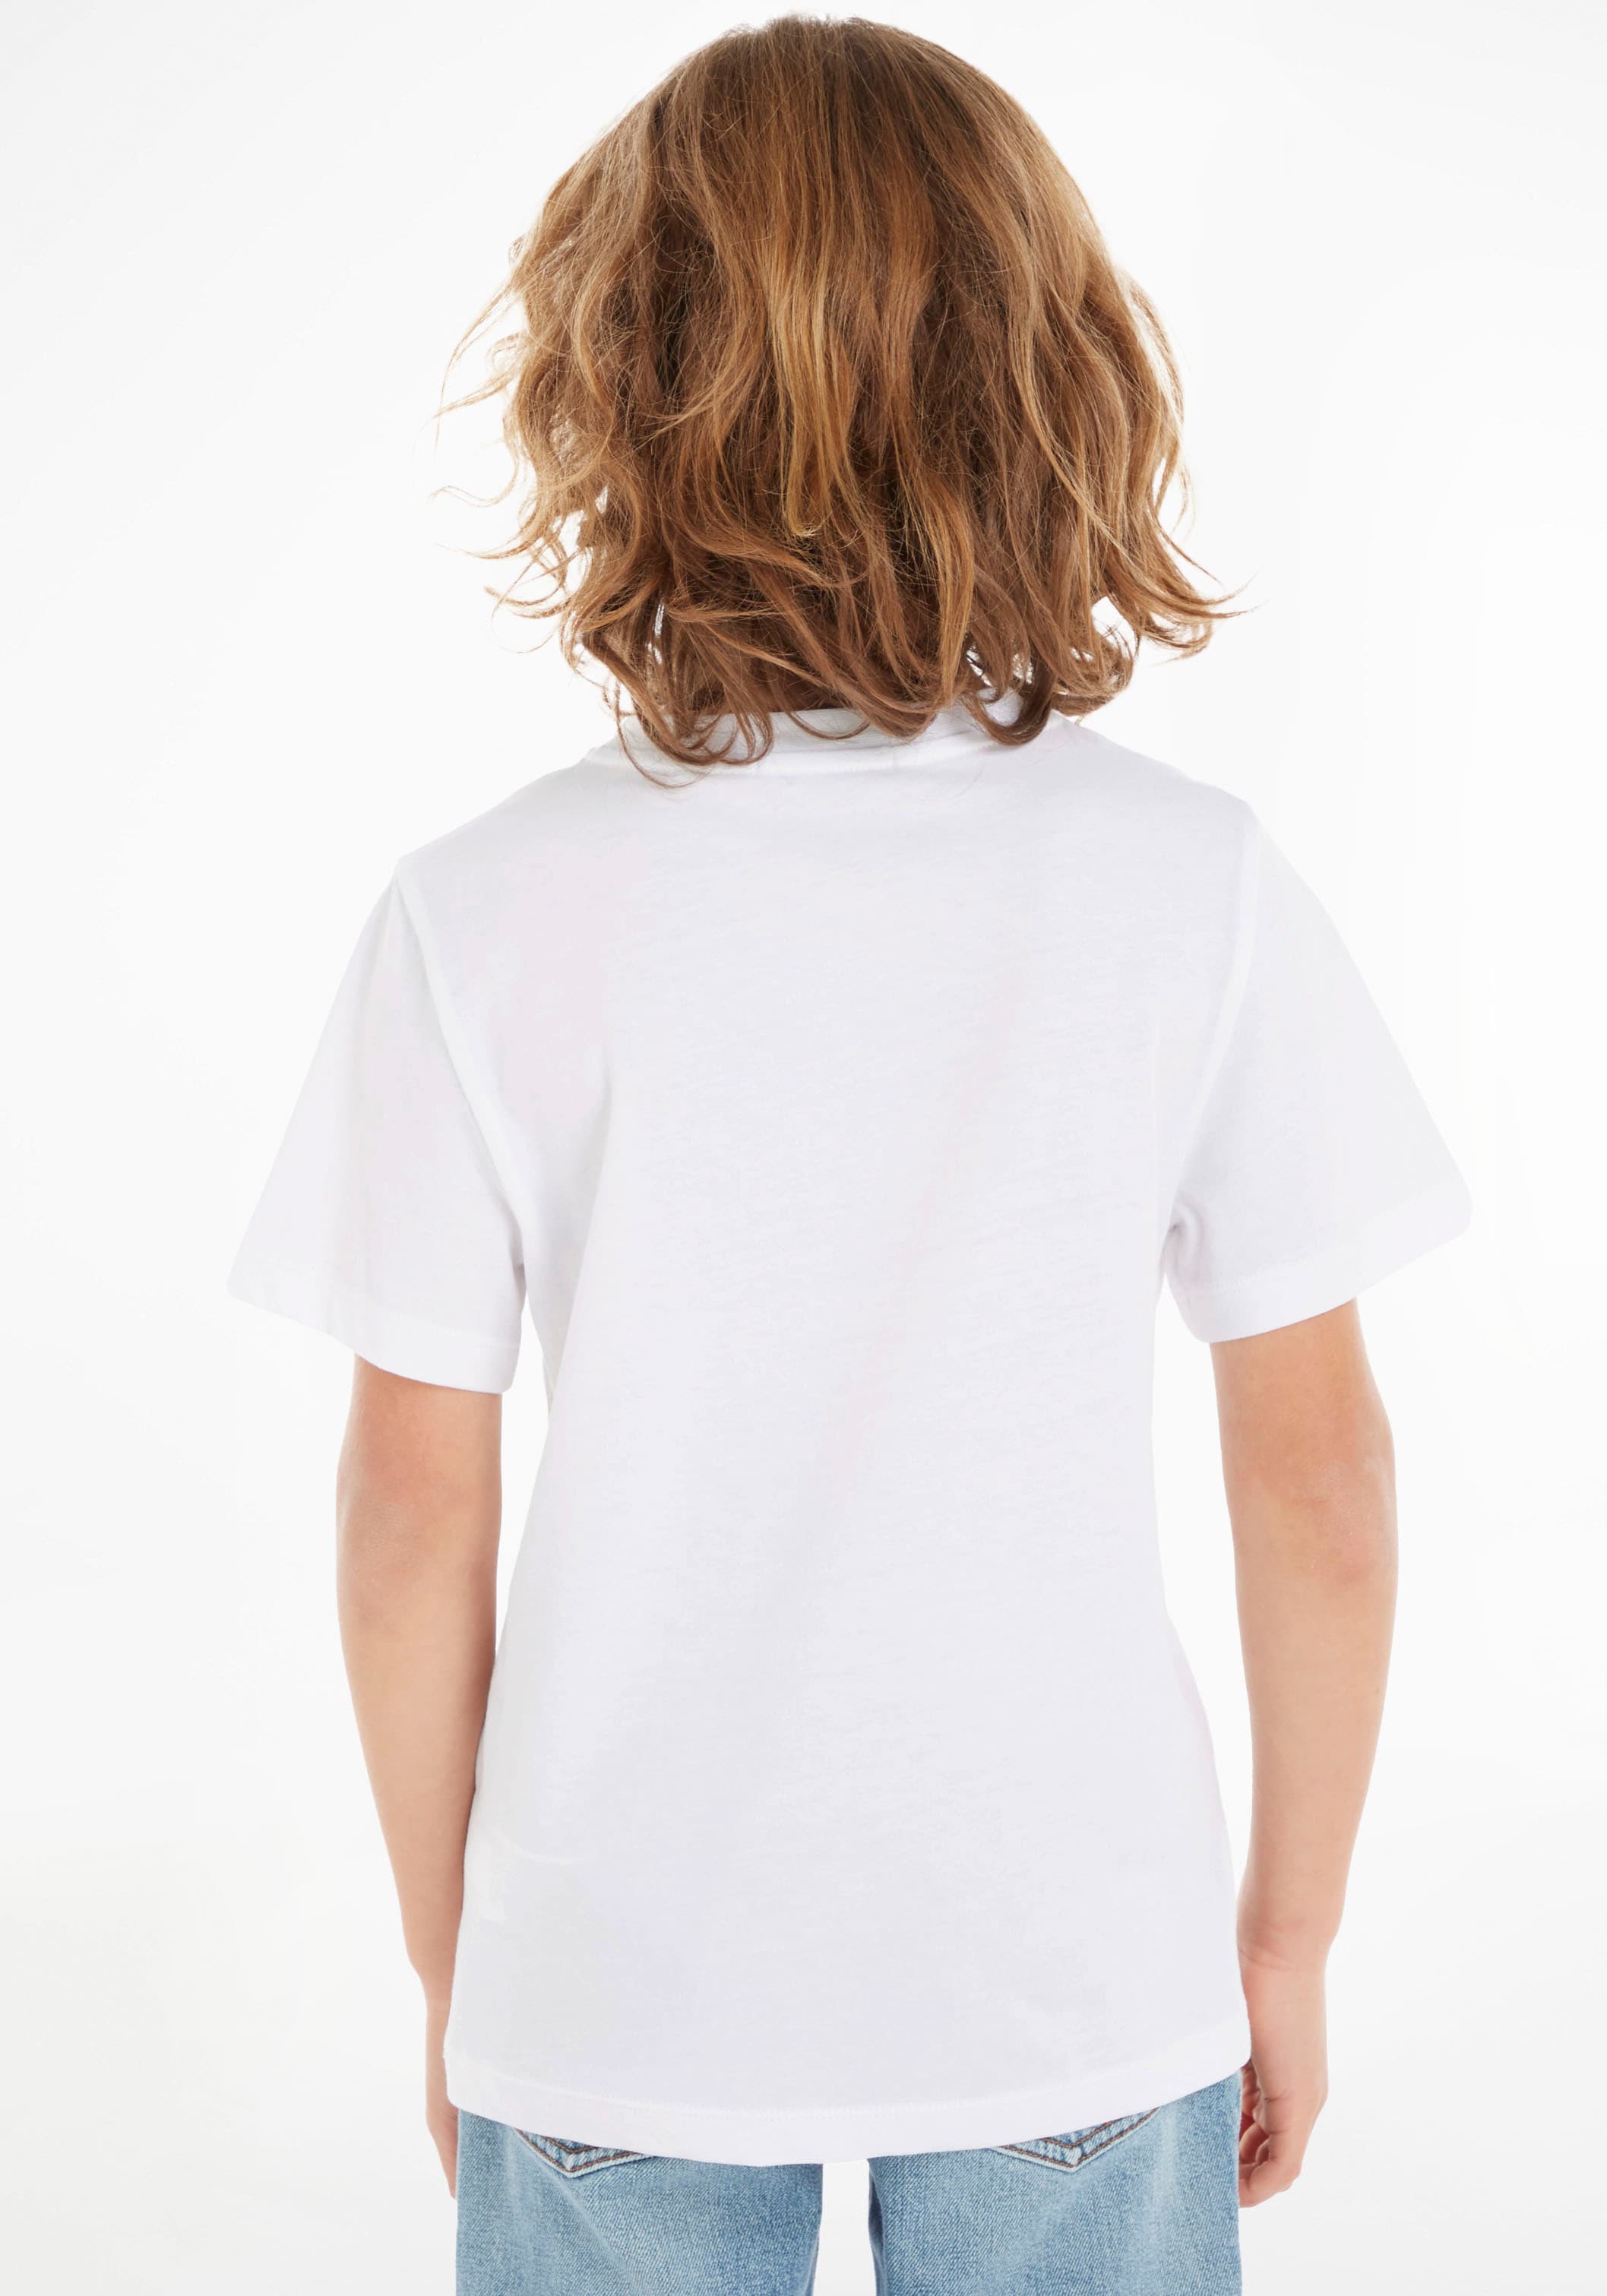 Klein Jeans online T-SHIRT« BAUR kaufen LOGO Calvin T-Shirt | V-NECK STACK »CKJ